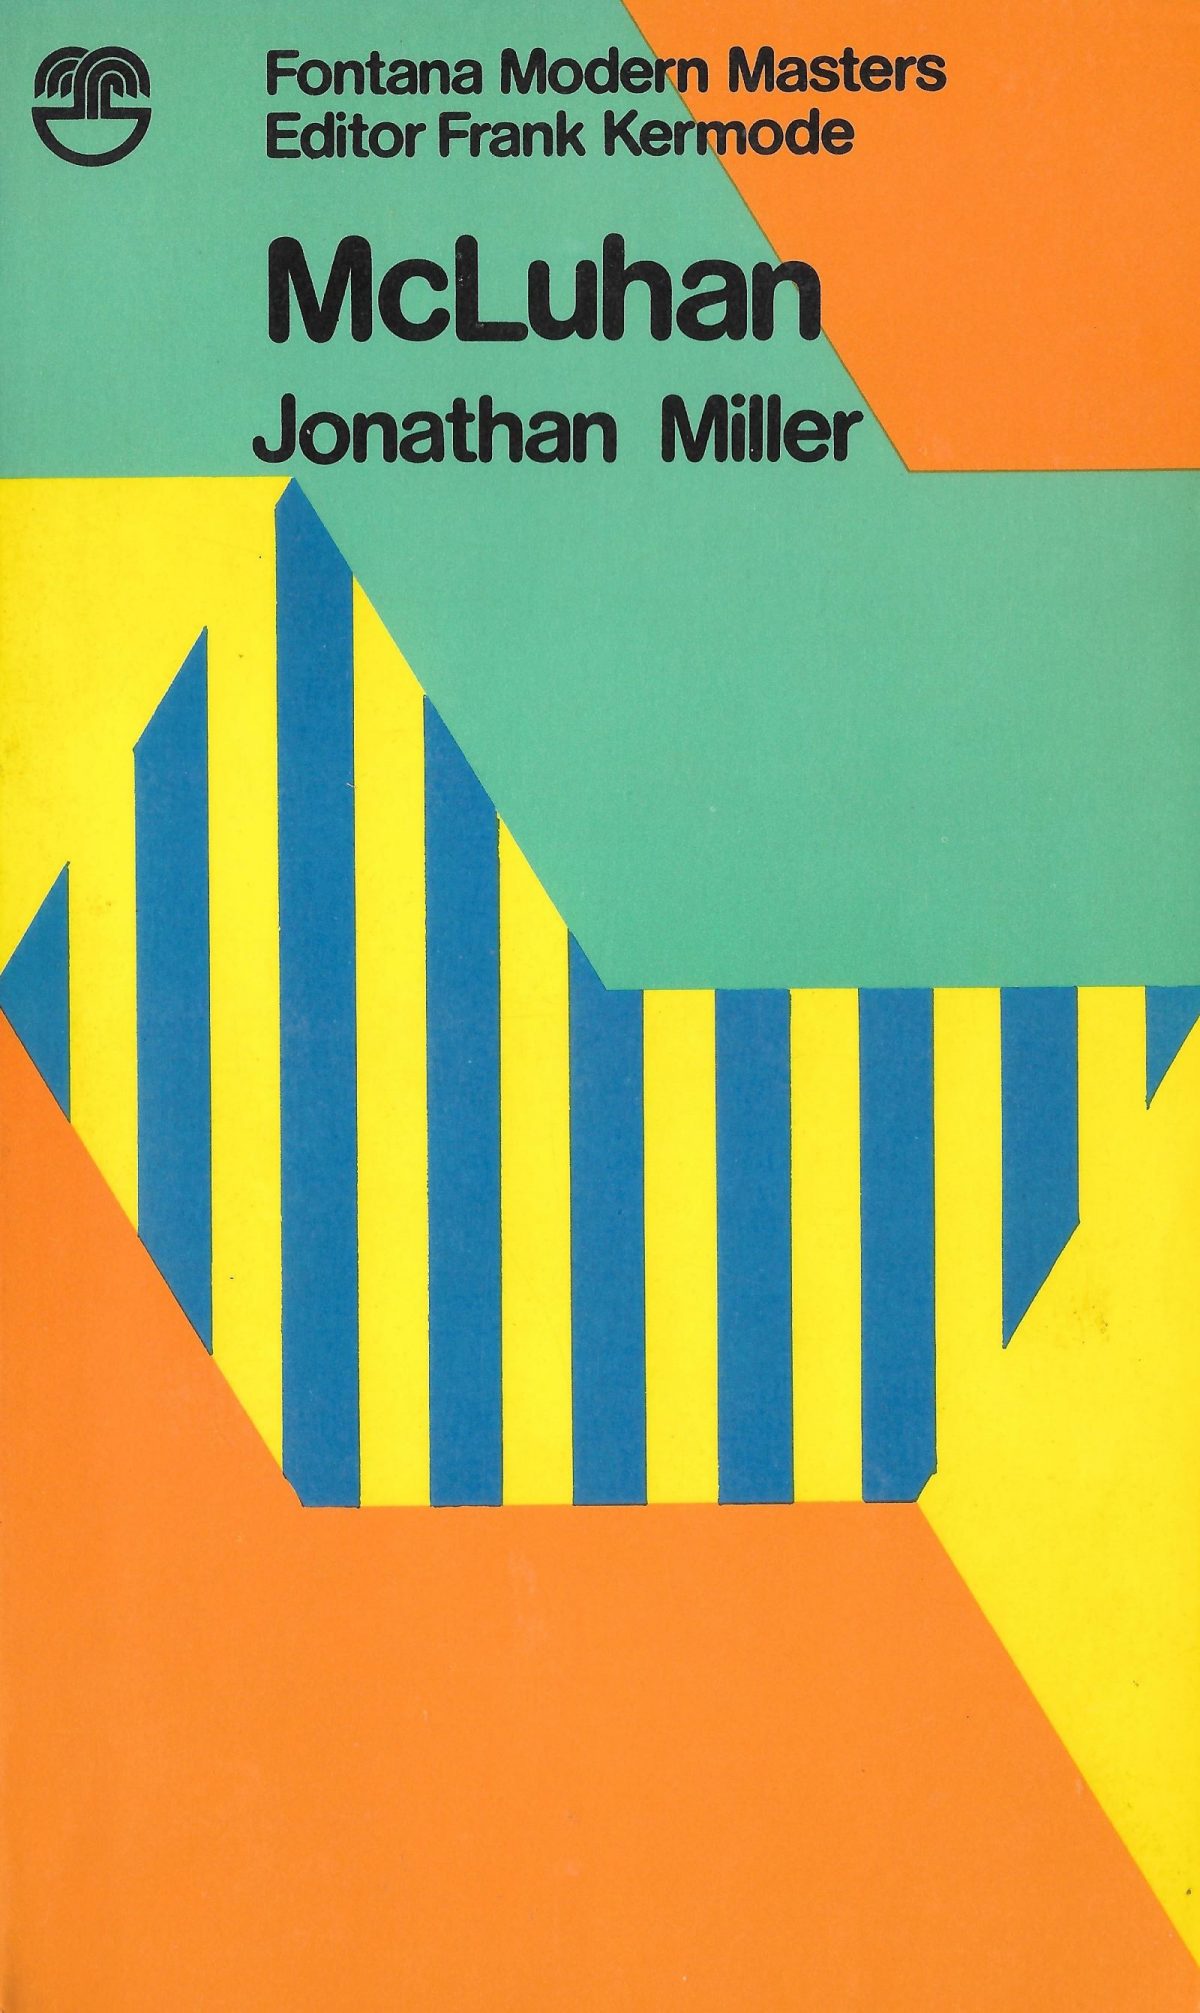 Oliver Bevan, Fontana Modern Masters, design, books, art, Marshall McLuhan